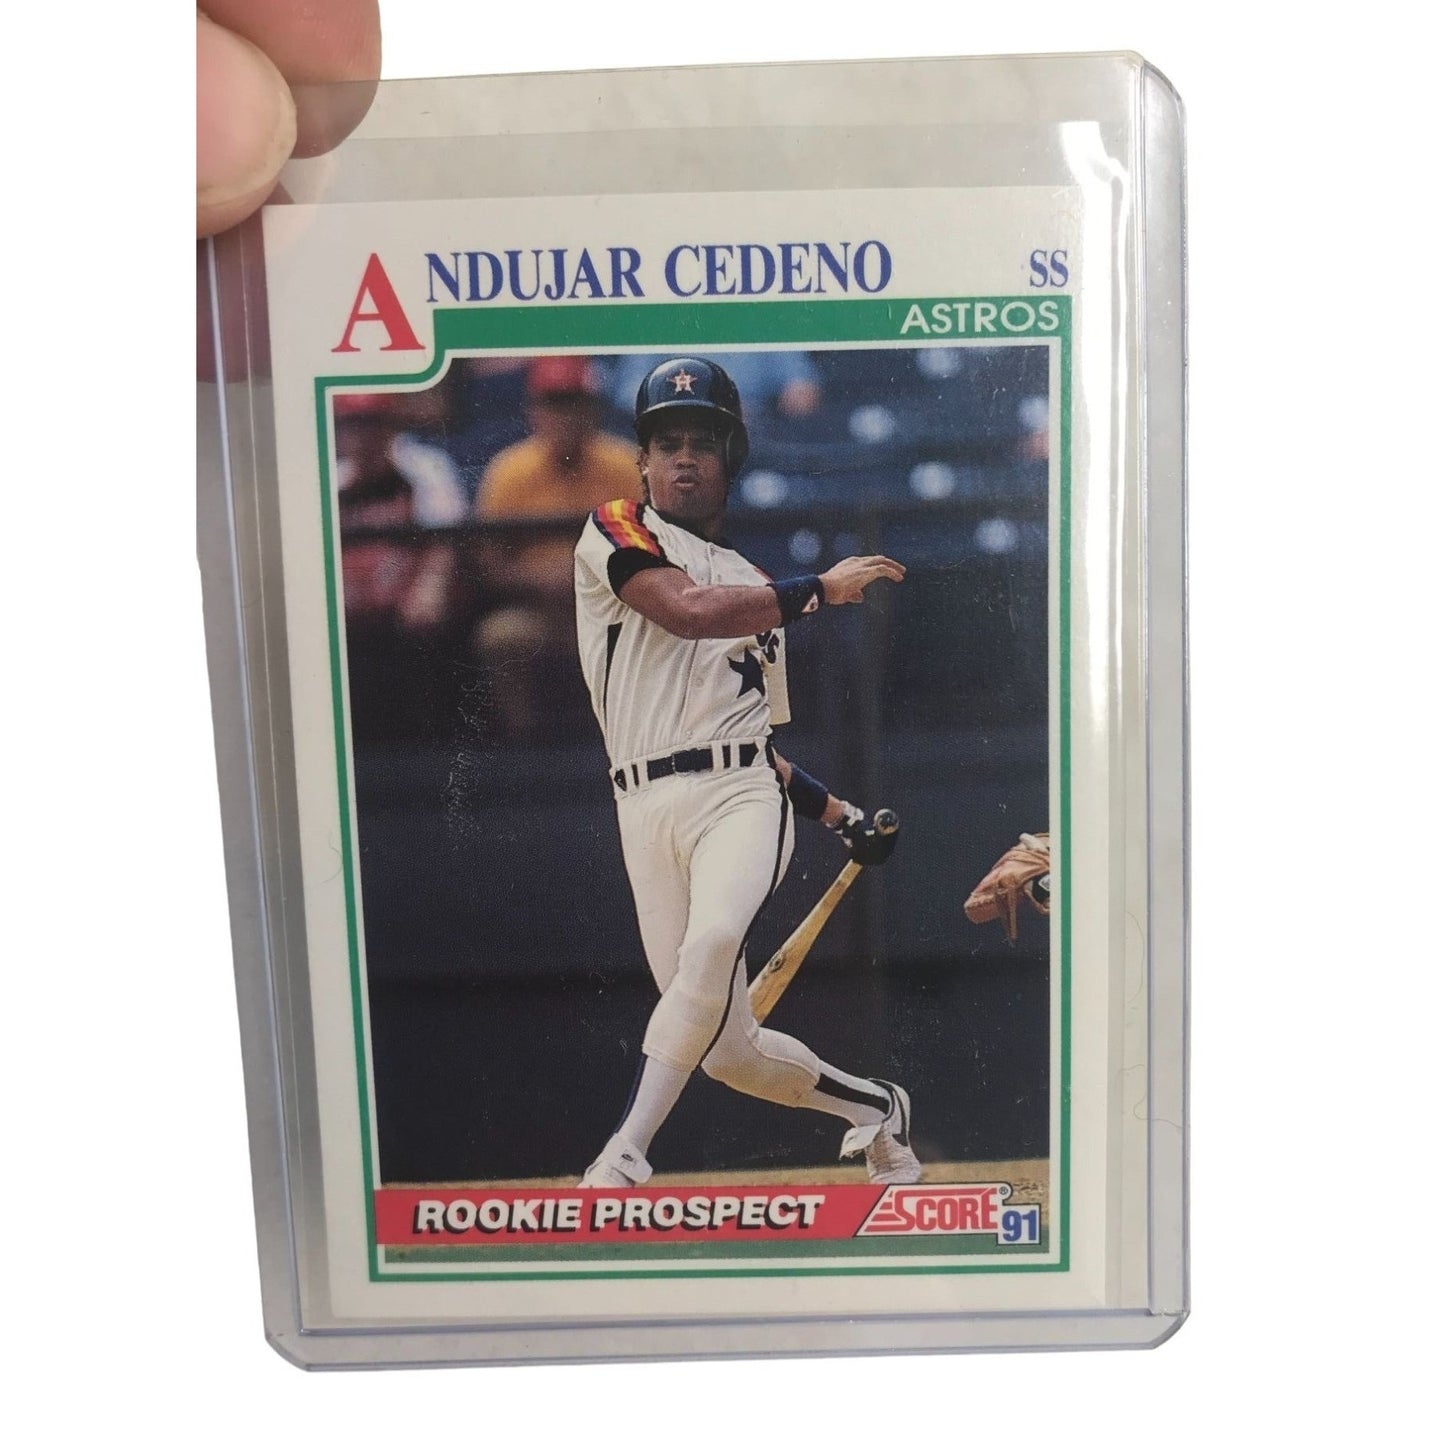 (8) of 1991 SCORE Rookie Prospect  Andujar Cedeno SS  - Card No. 753